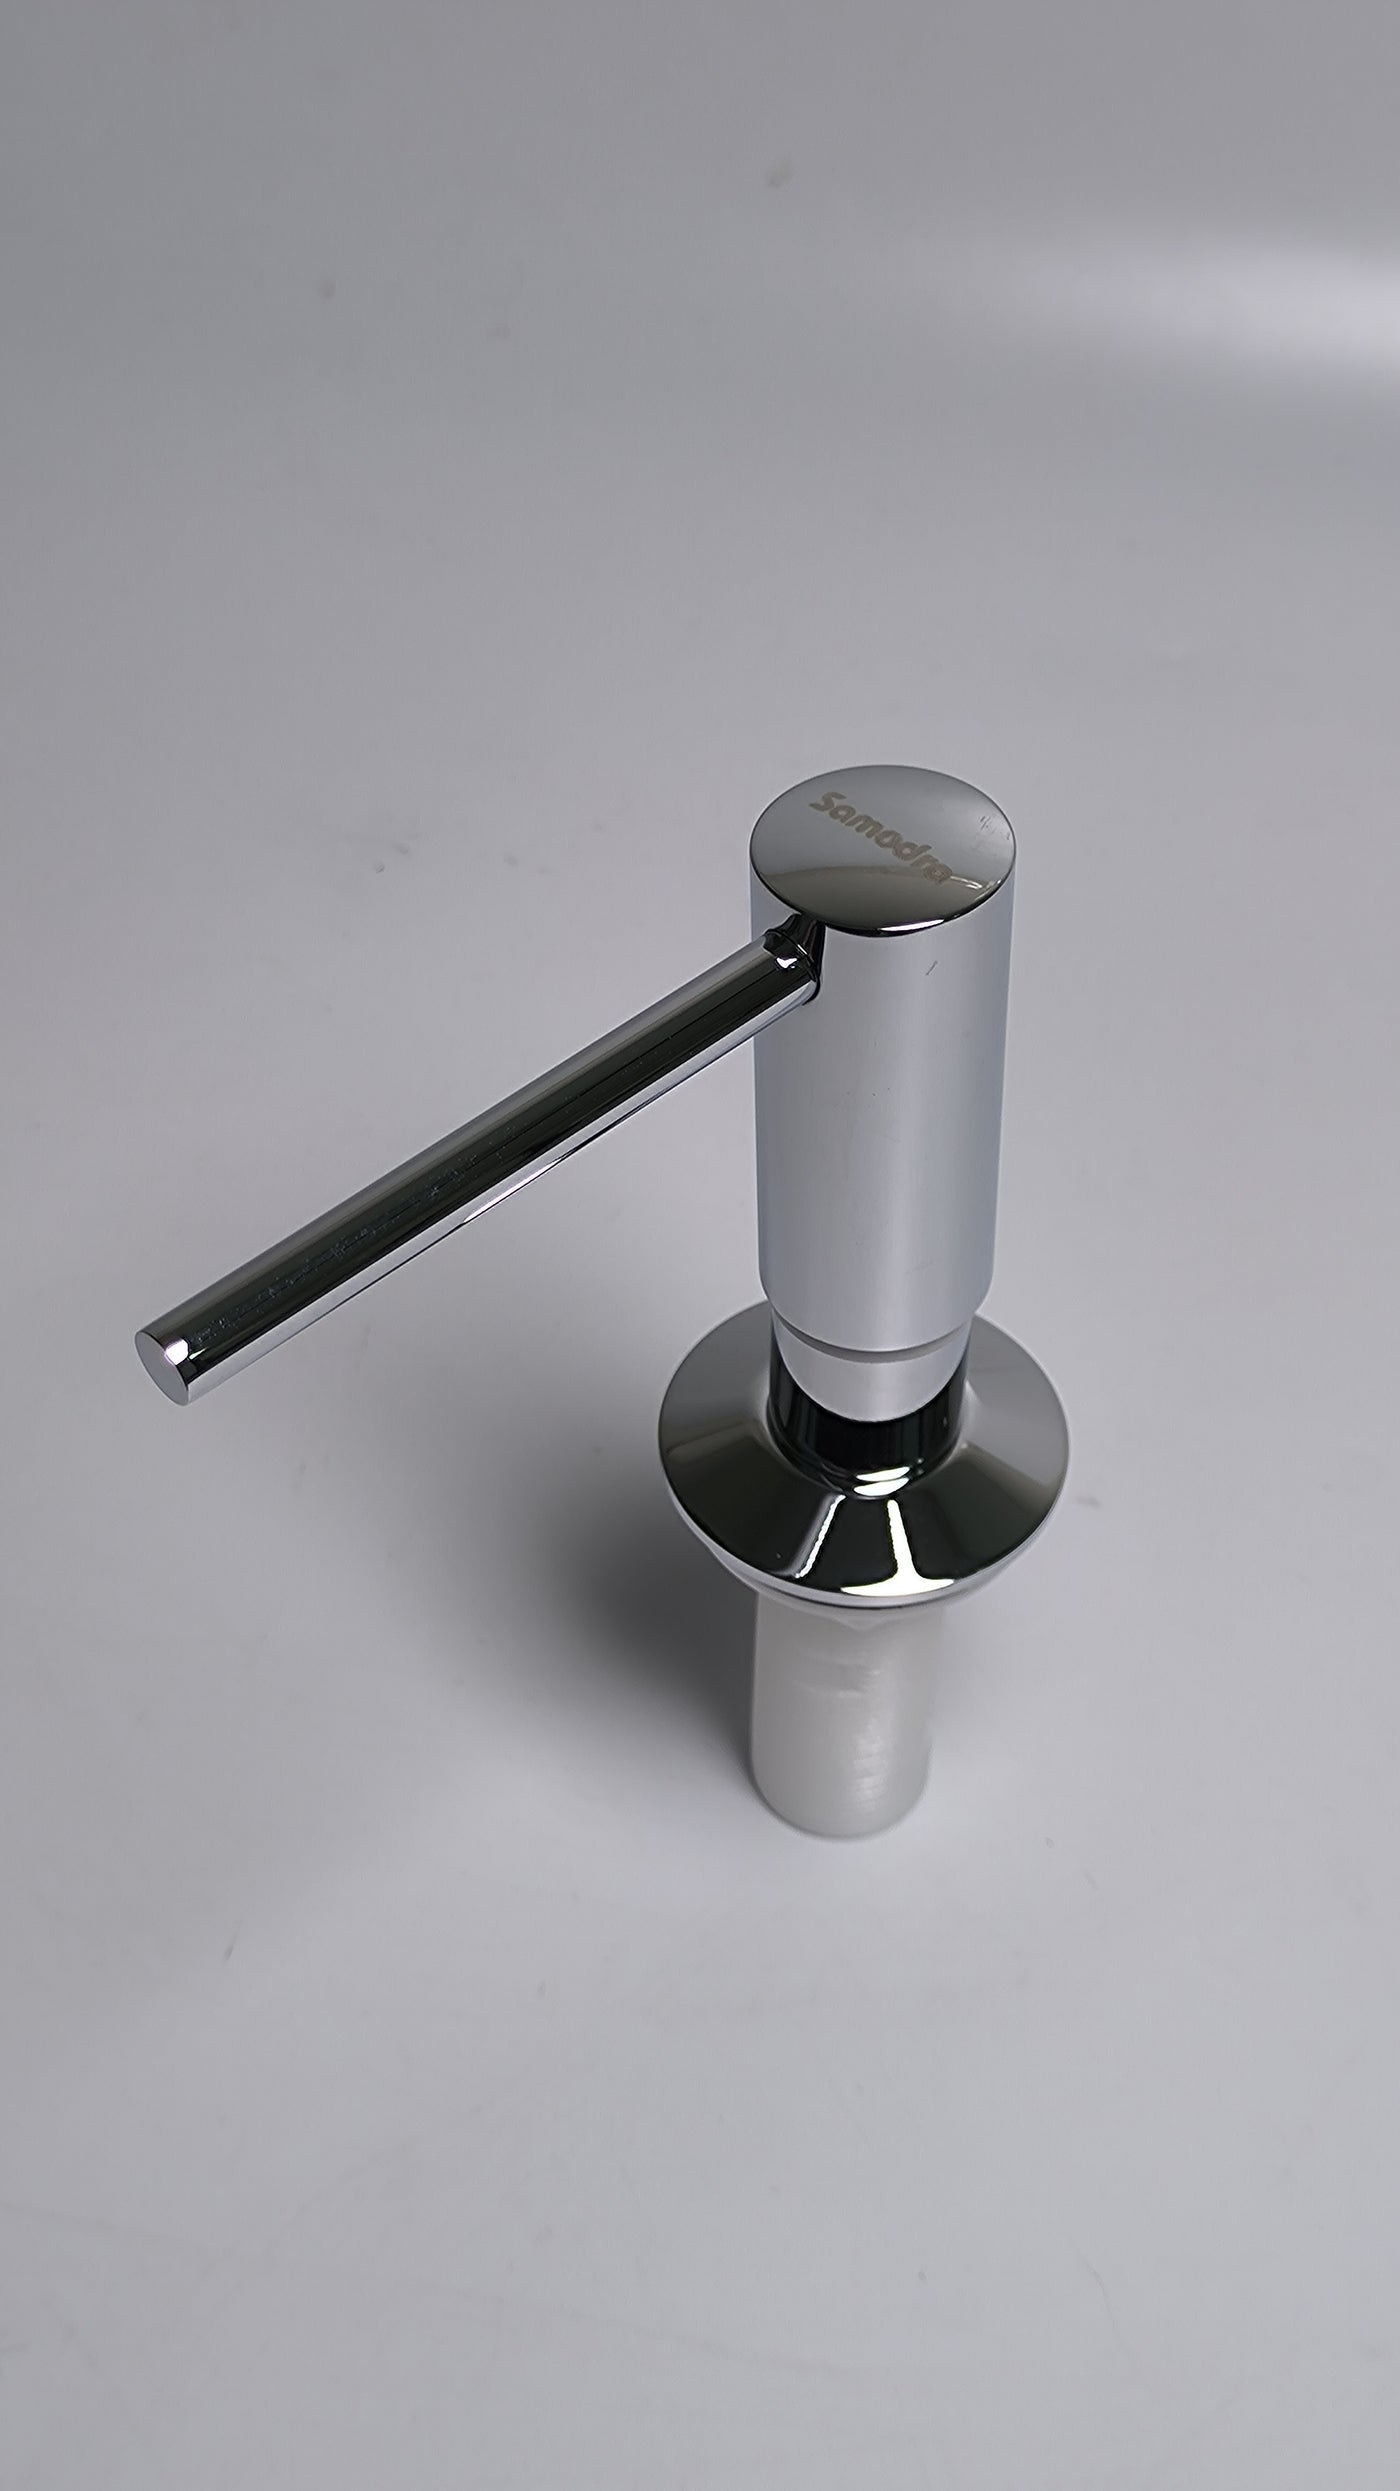 Samodra Sink Soap Dispenser, Metal Pump Head Liquid Lotion Countertop Kitchen Bathroom Soap Dispenser with 17 OZ PET Bottle (Chrome)